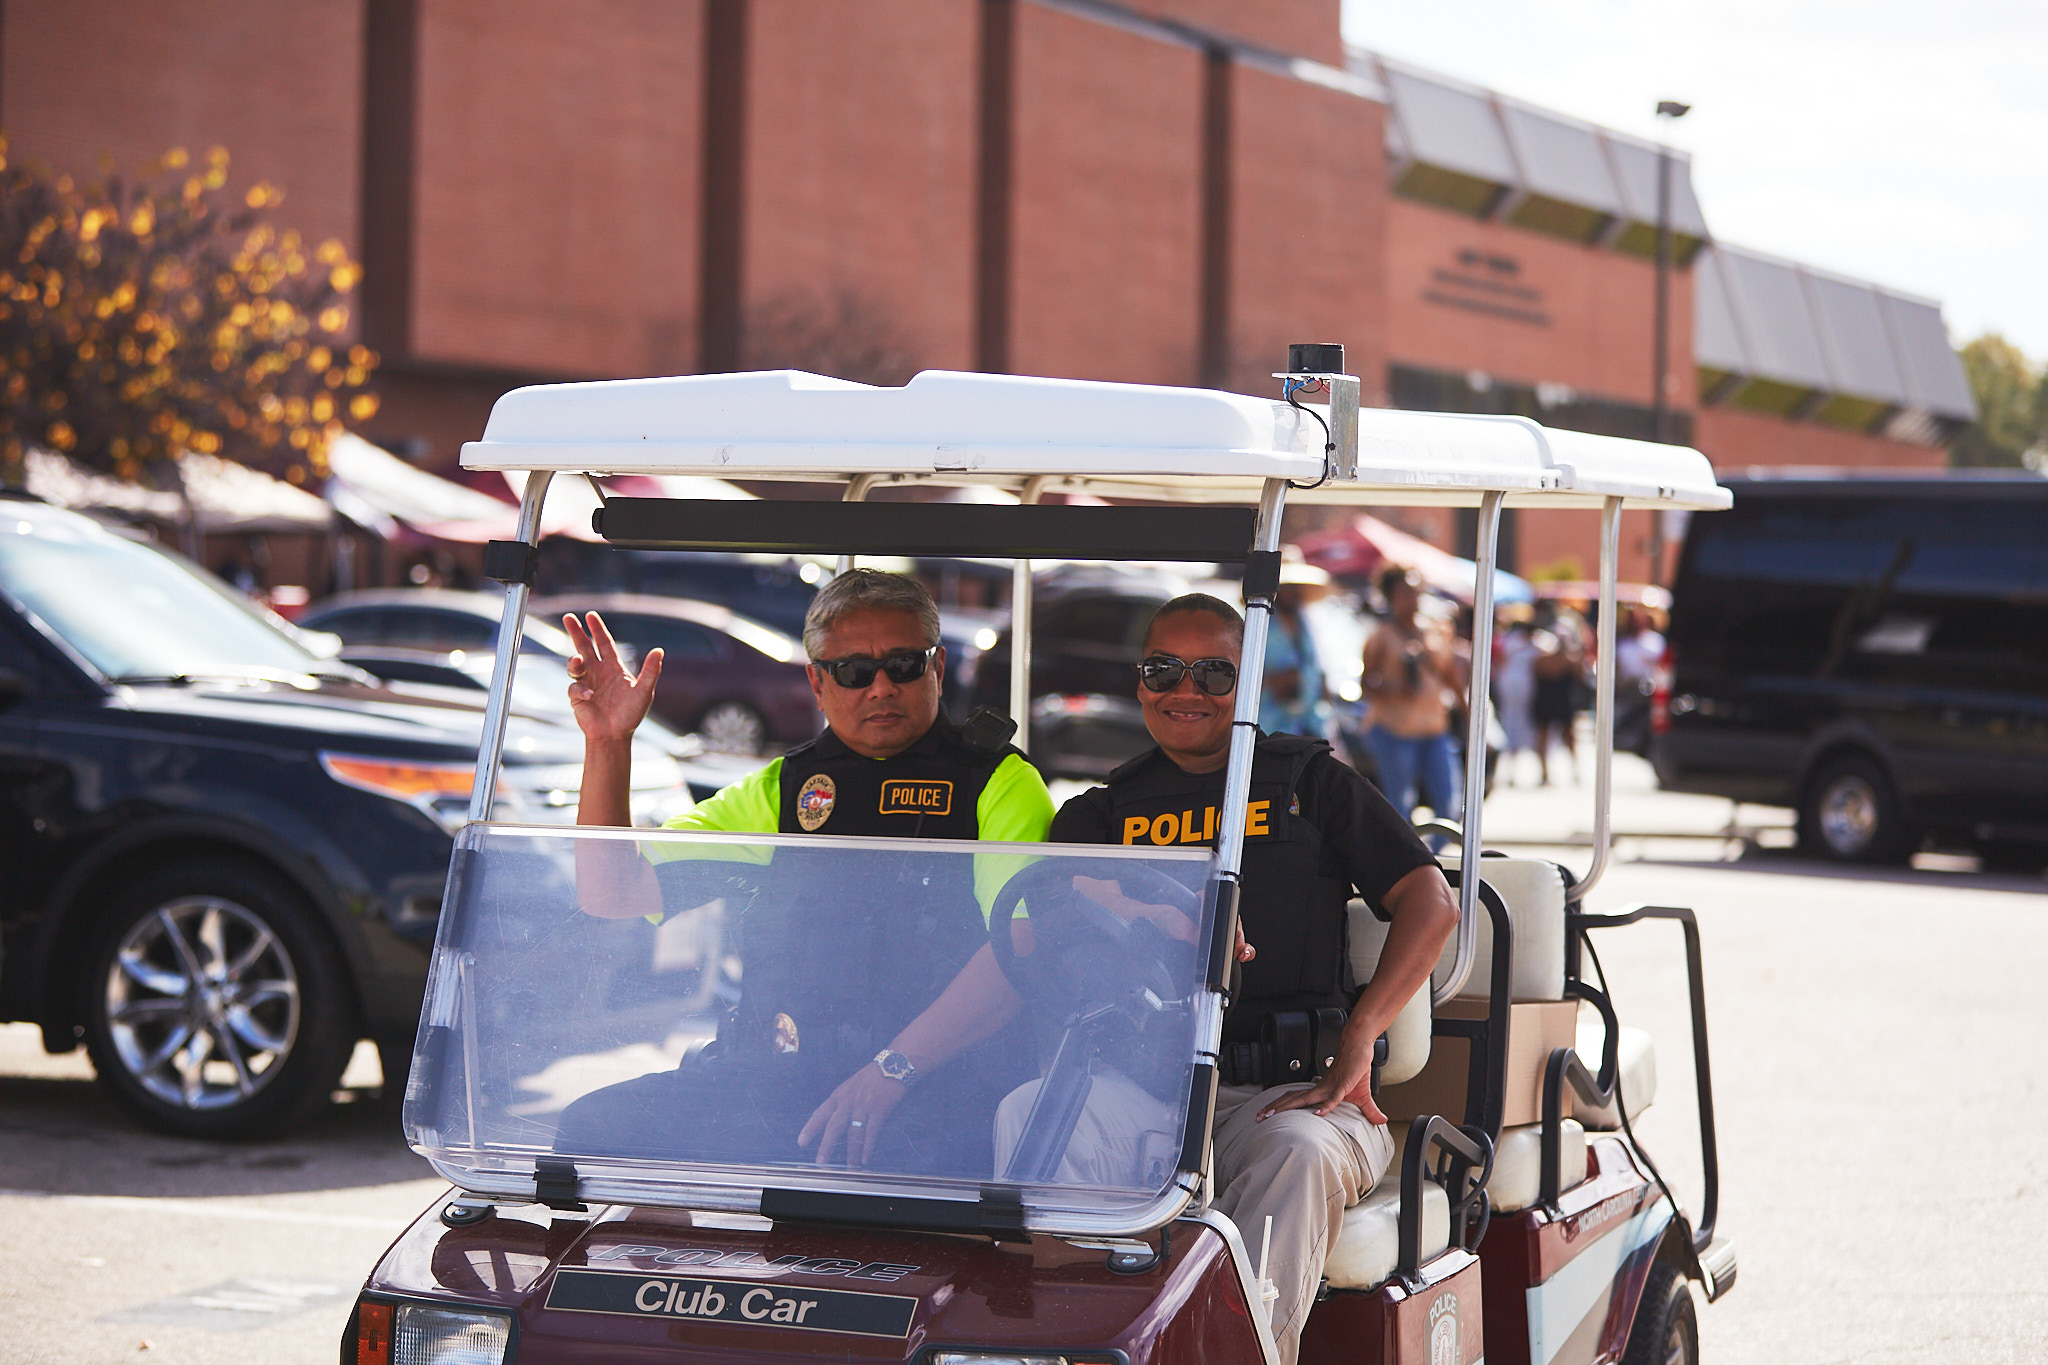 Police in golf cart